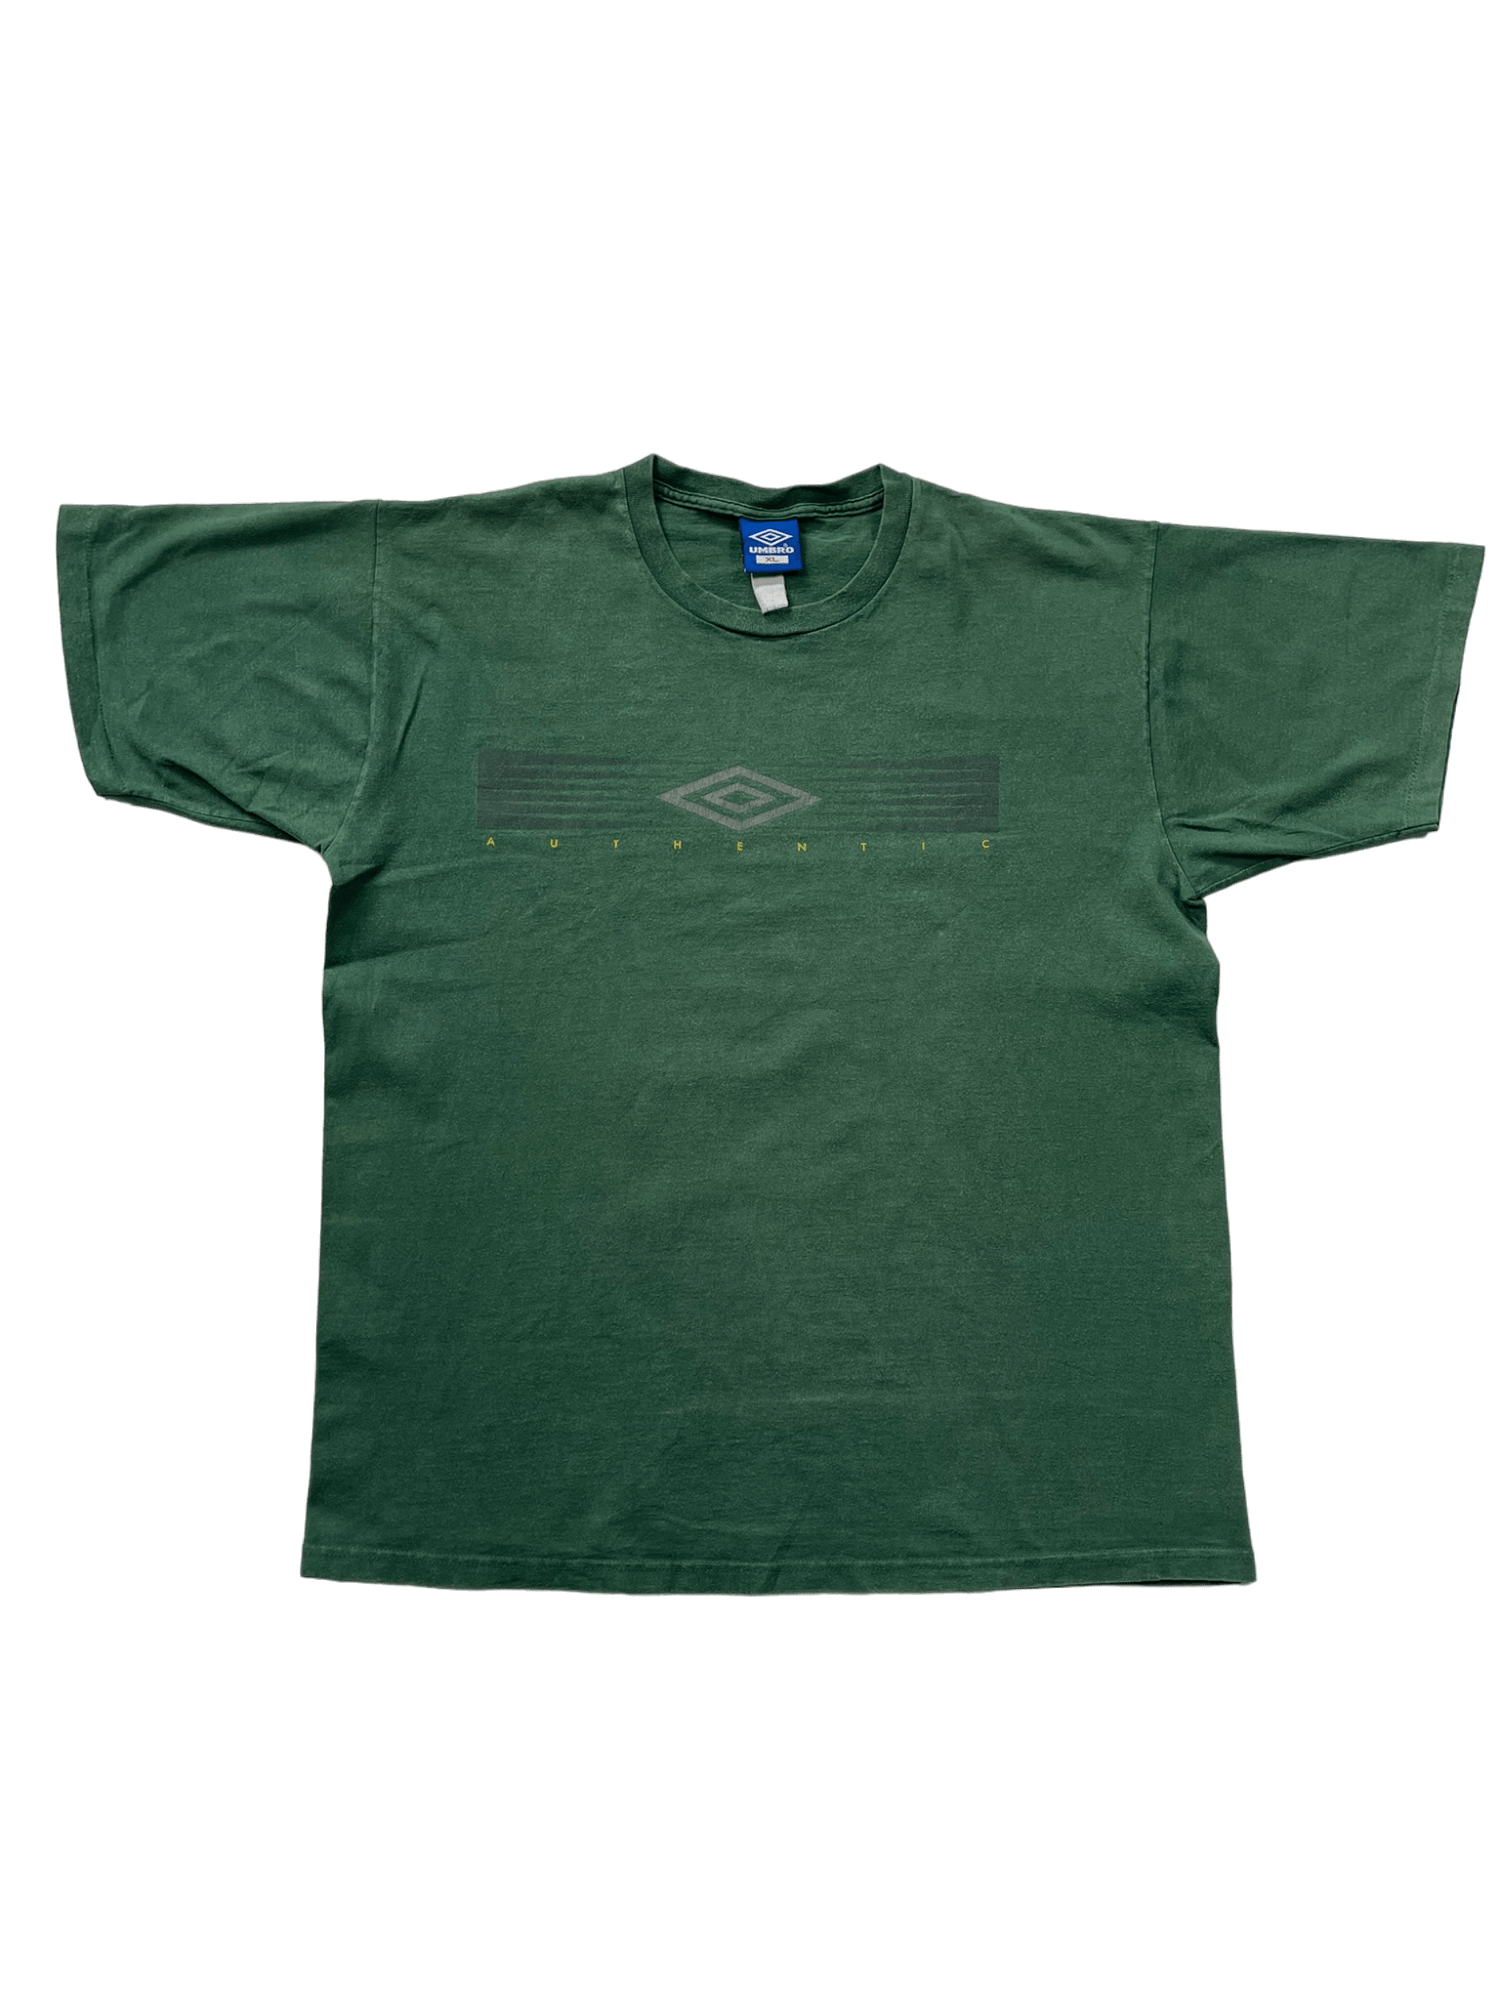 The Vintage Racks T-Shirt Umbro Center Logo - XL